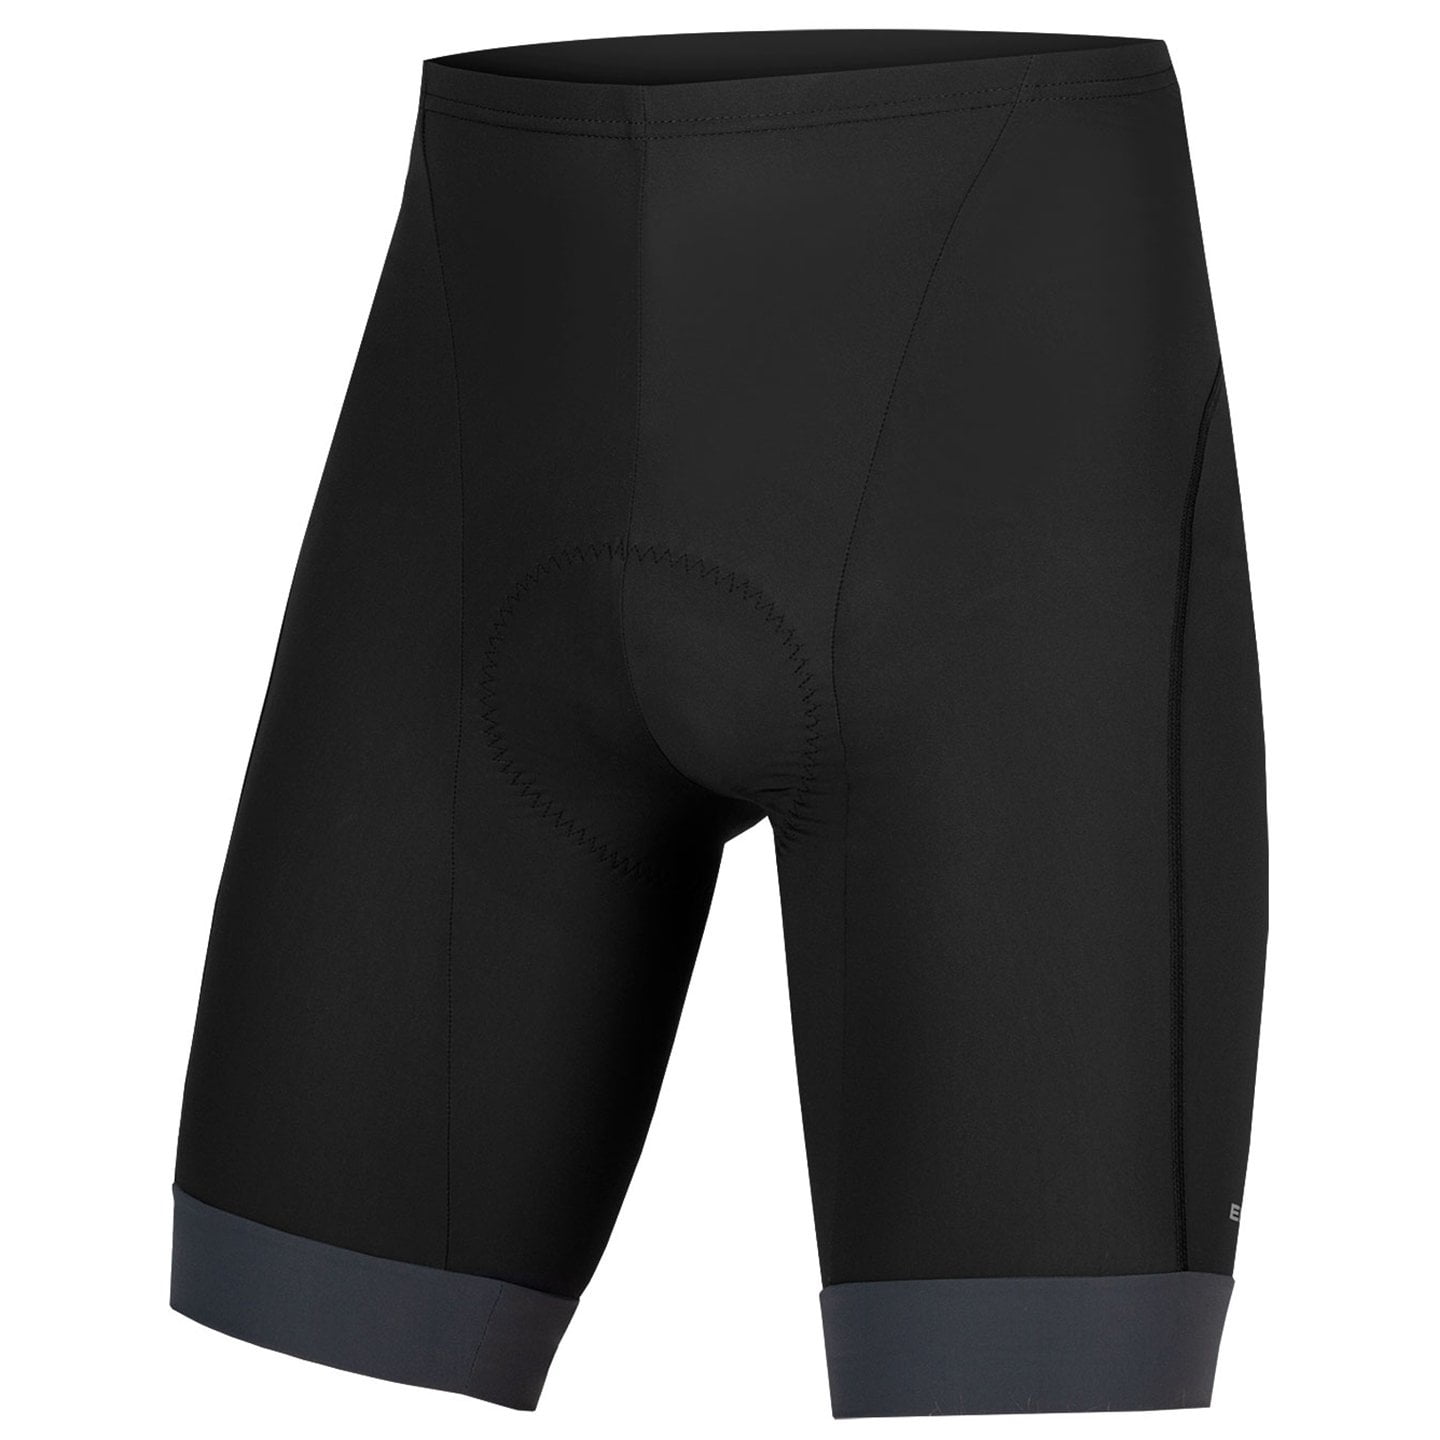 Xtract Lite Cycling Shorts Cycling Shorts, for men, size L, Cycle shorts, Cycling clothing